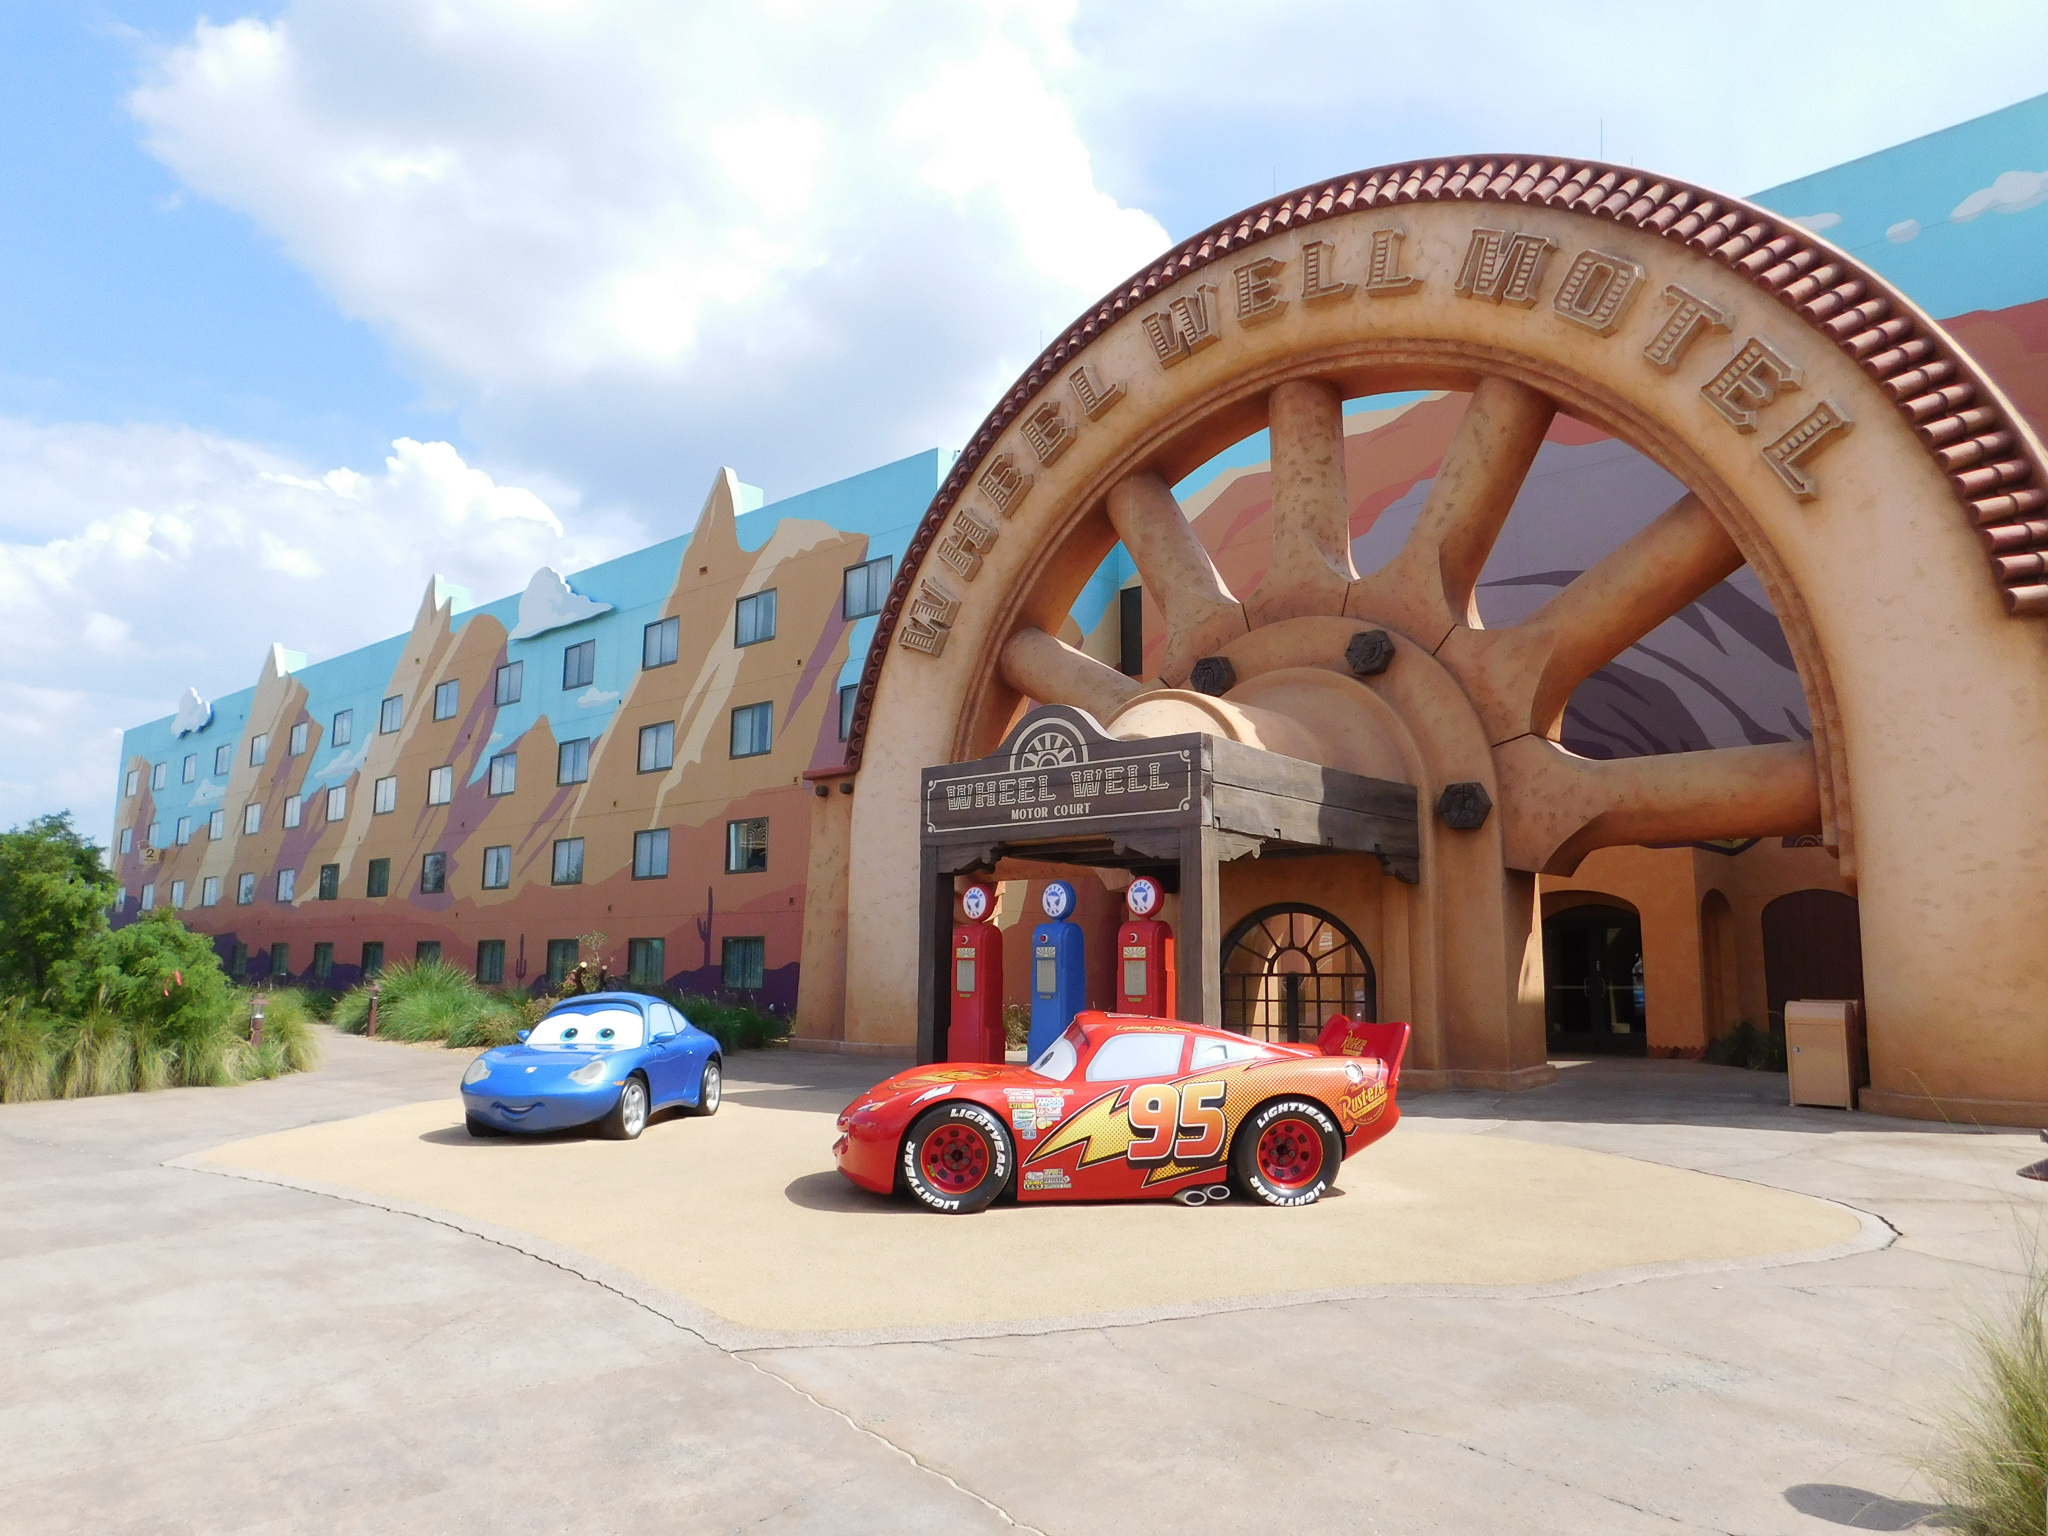 Art of Animation Resort - Cars - Wheel Well -- Showcase the World Travel